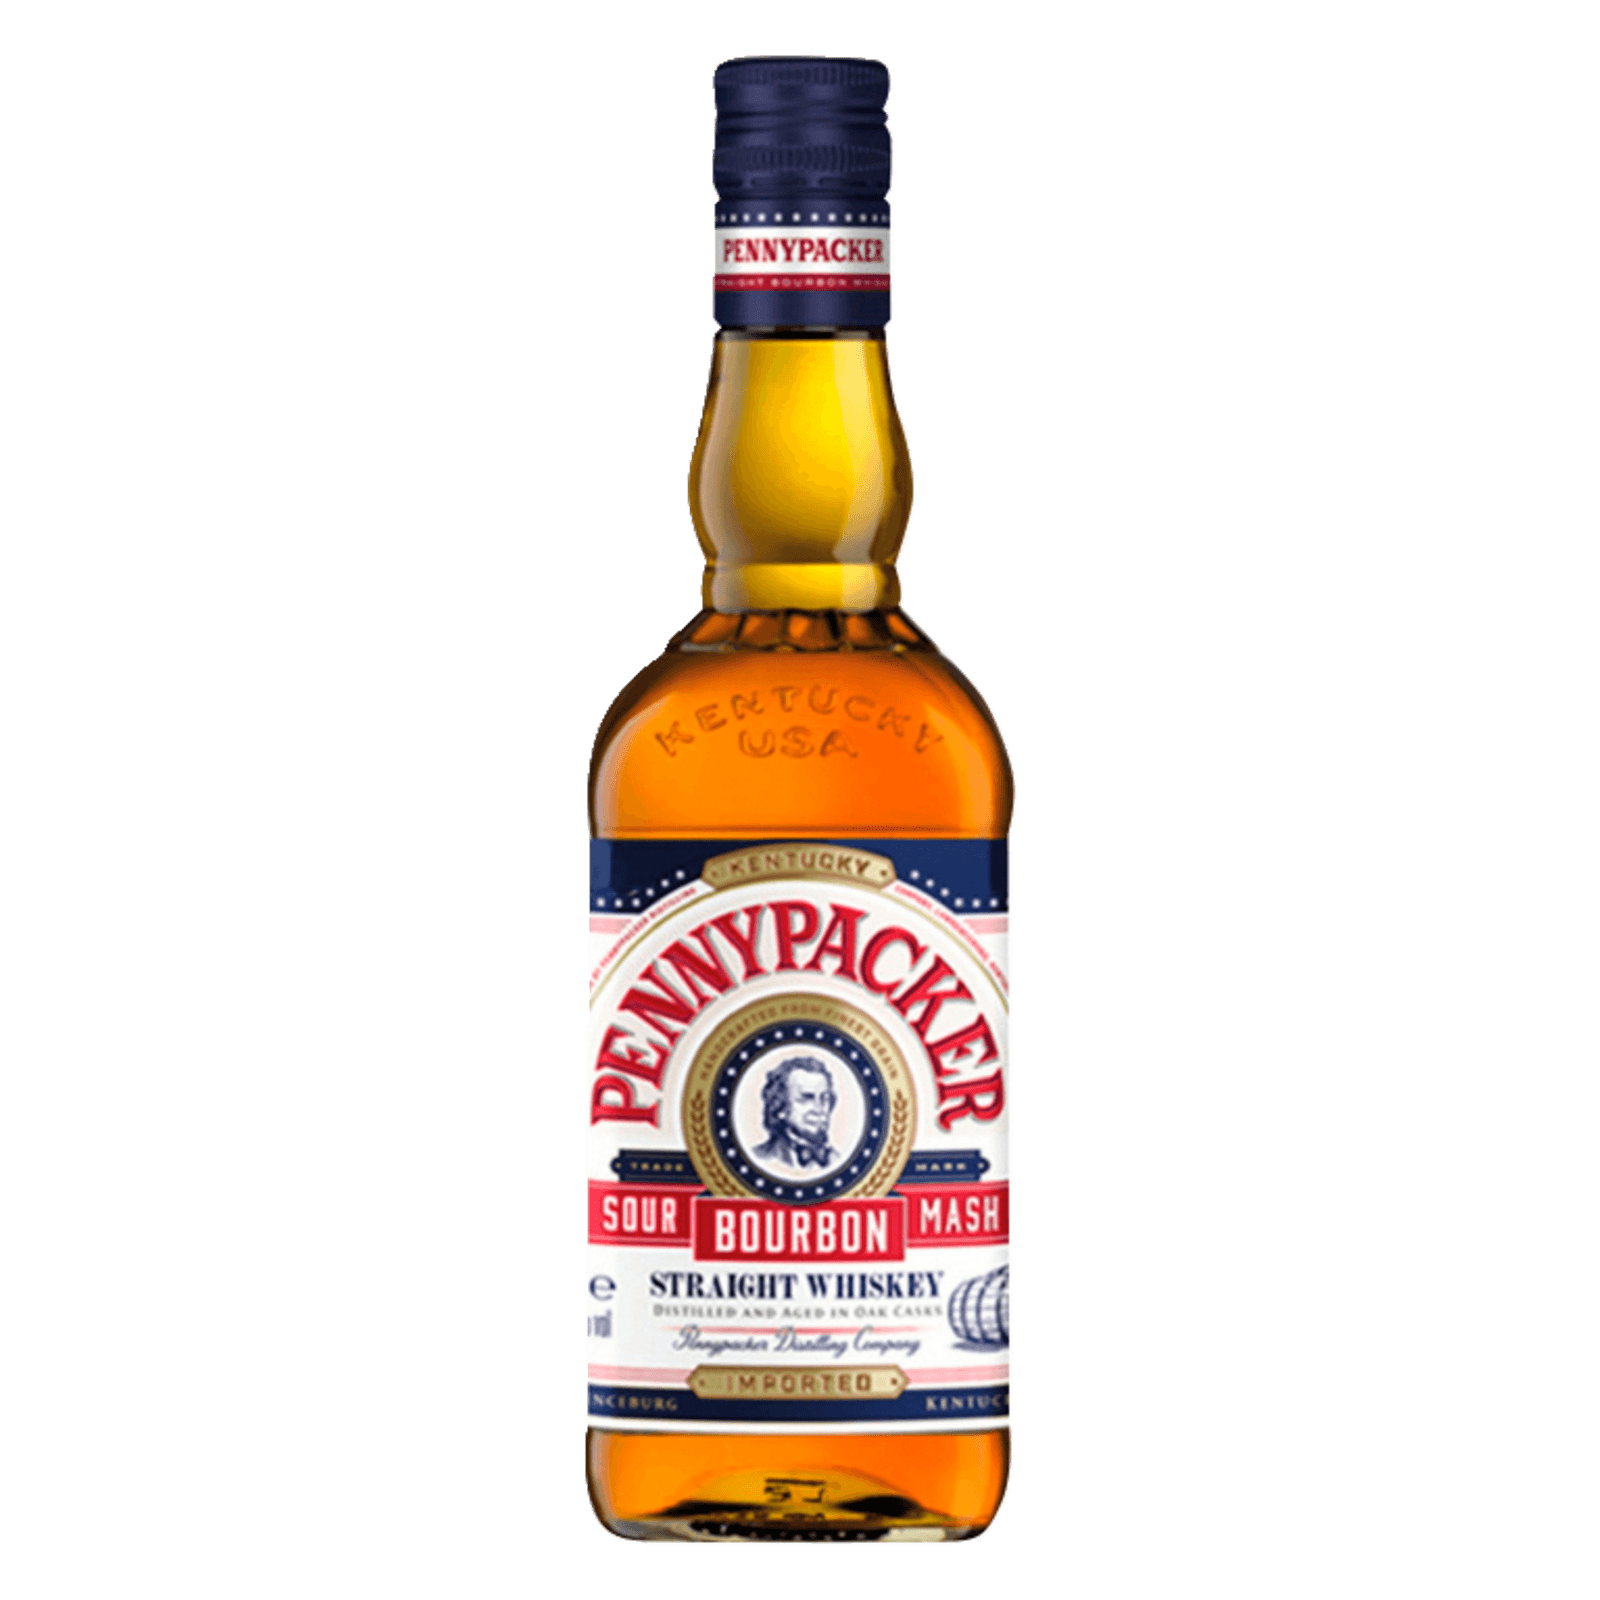 Pennypacker Bourbon Whiskey 07l Bei Rewe Online Bestellen